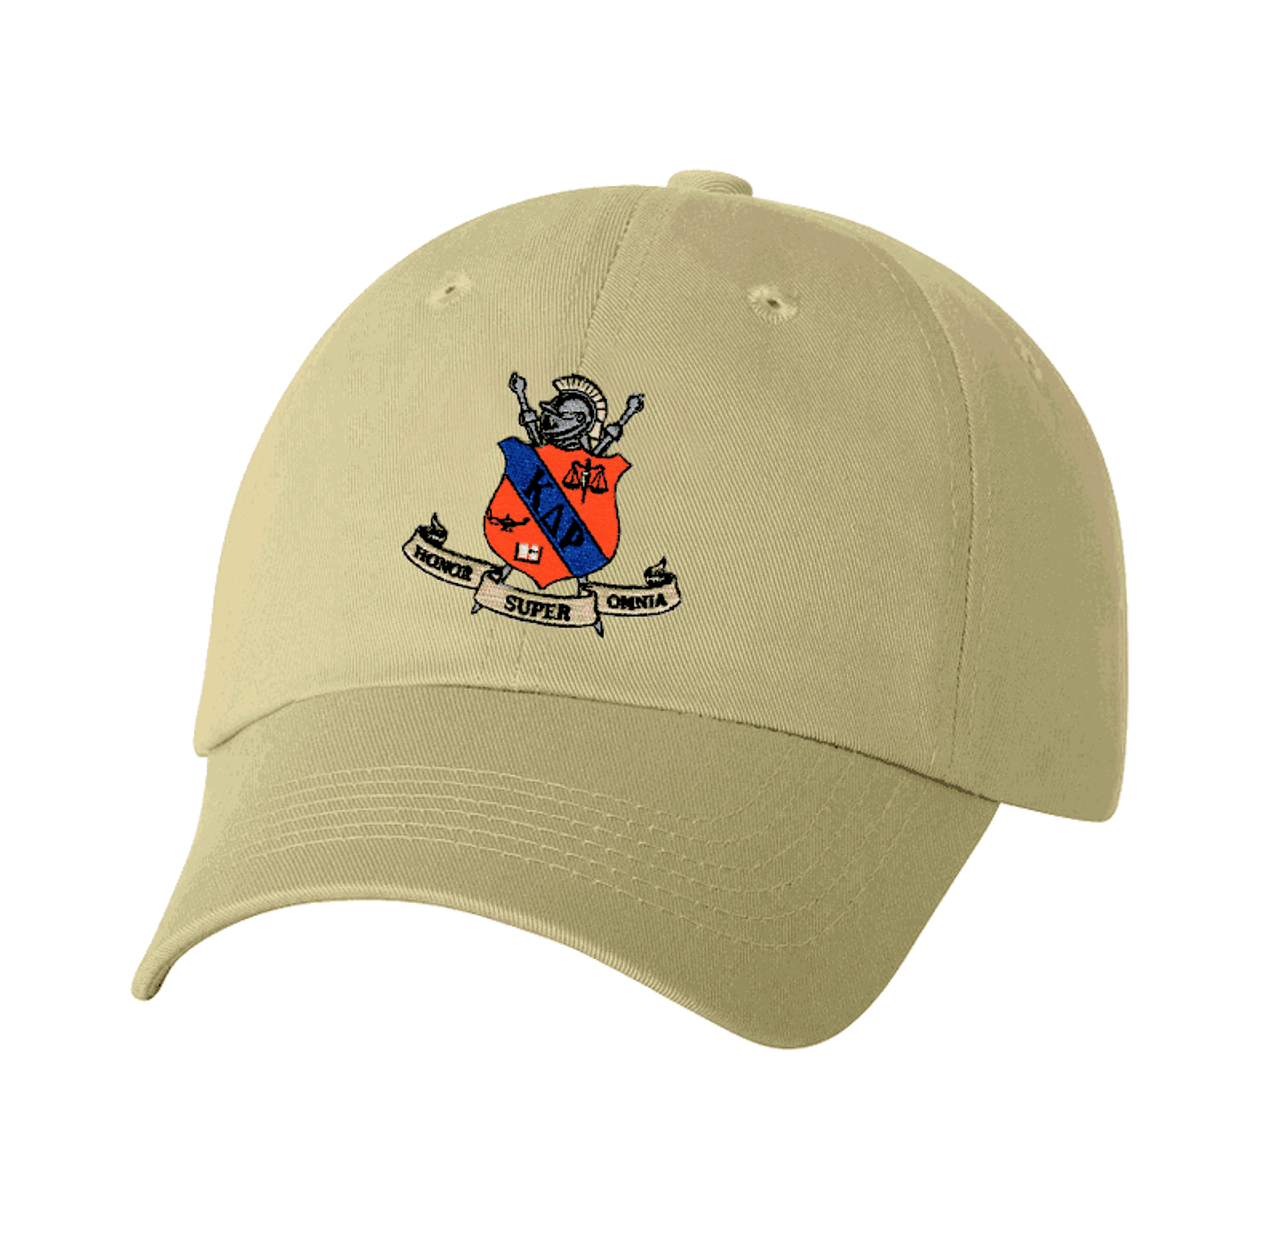 DISCOUNT-Kappa Delta Rho Crest - Shield Emblem Hat - Greek Gear